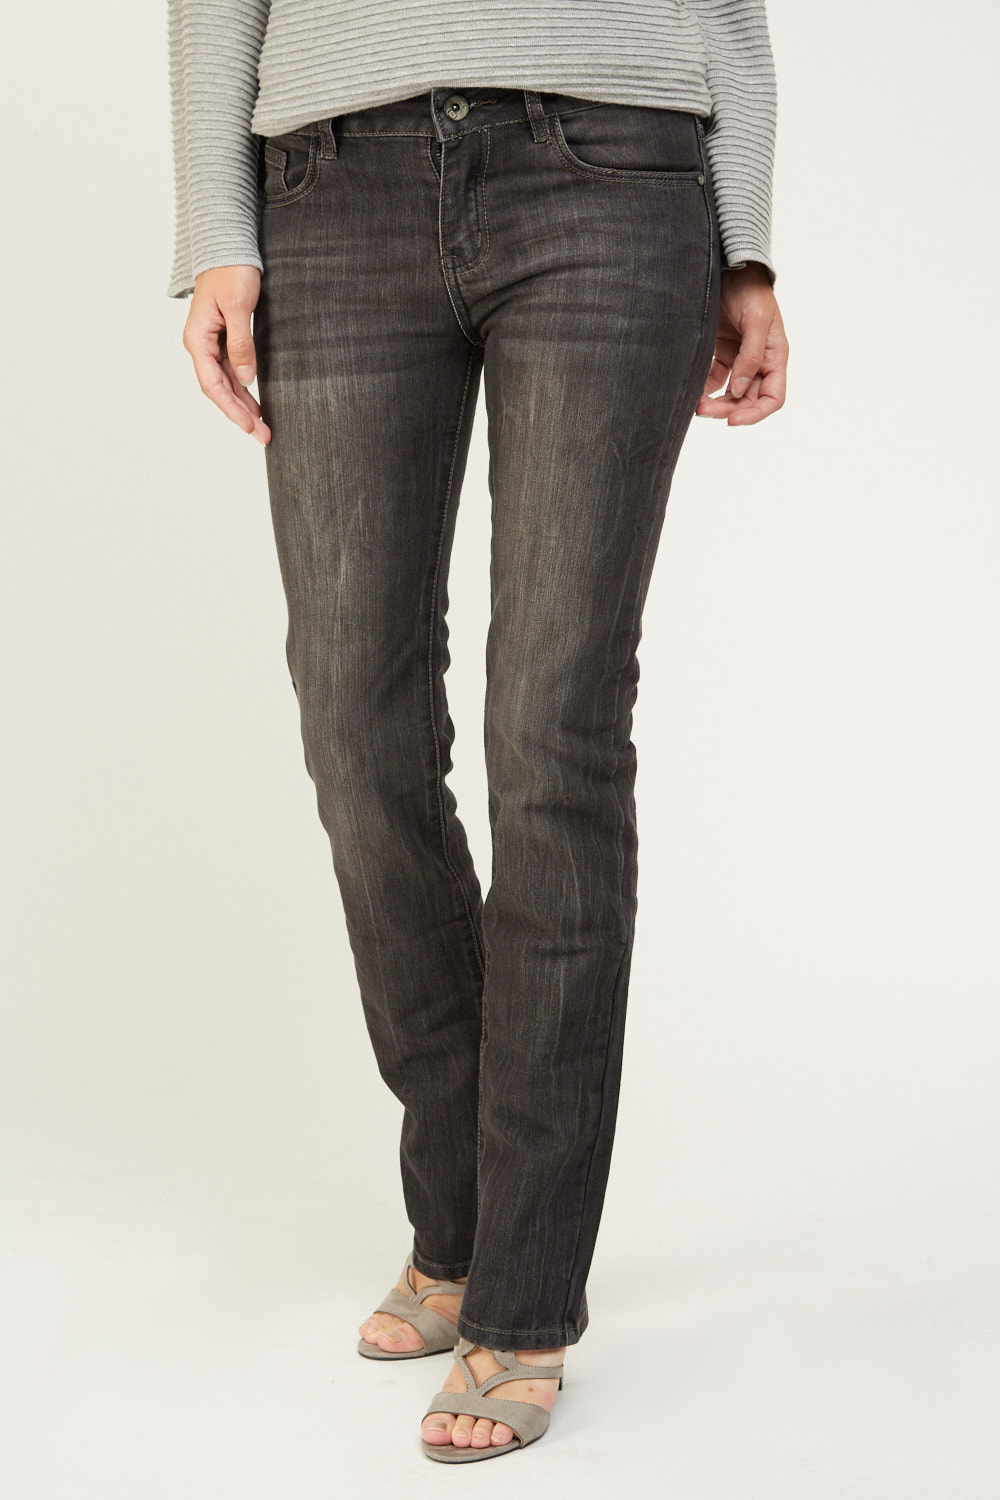 Charcoal Denim Jeans - Just $6